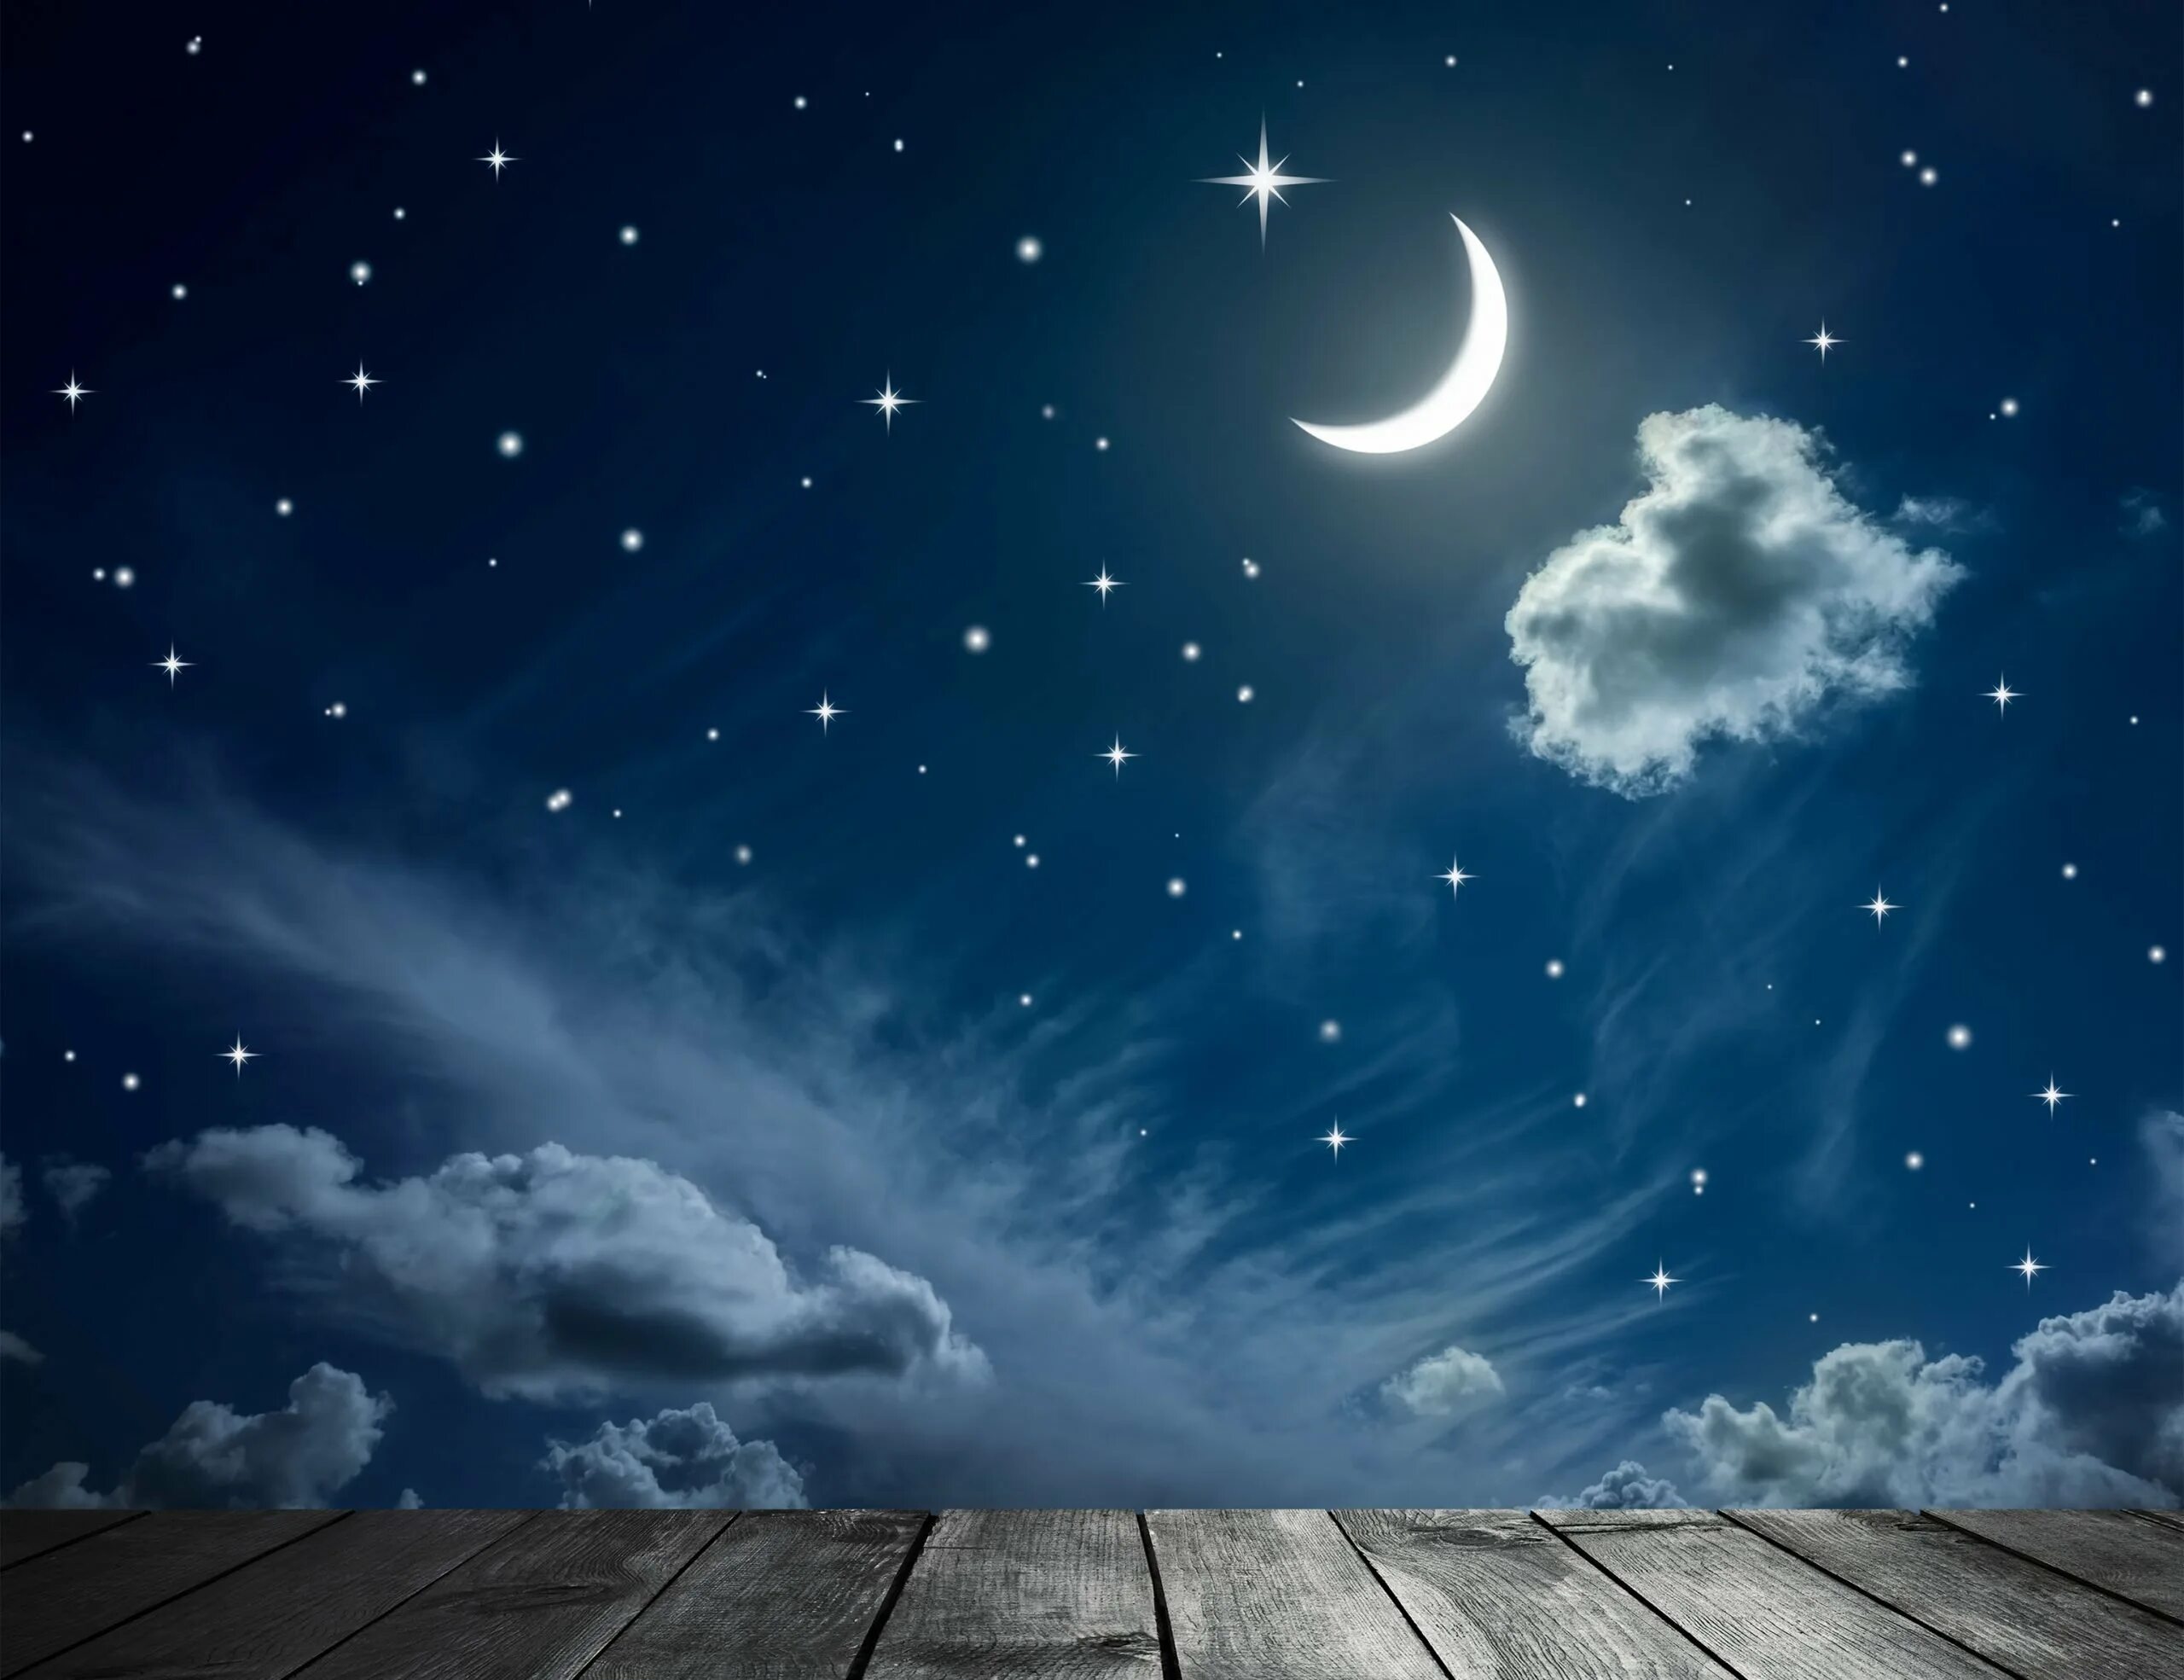 Lunar star. Луна и звезды. Звезда с неба. Ночное небо. Ночное небо со звездами и луной.